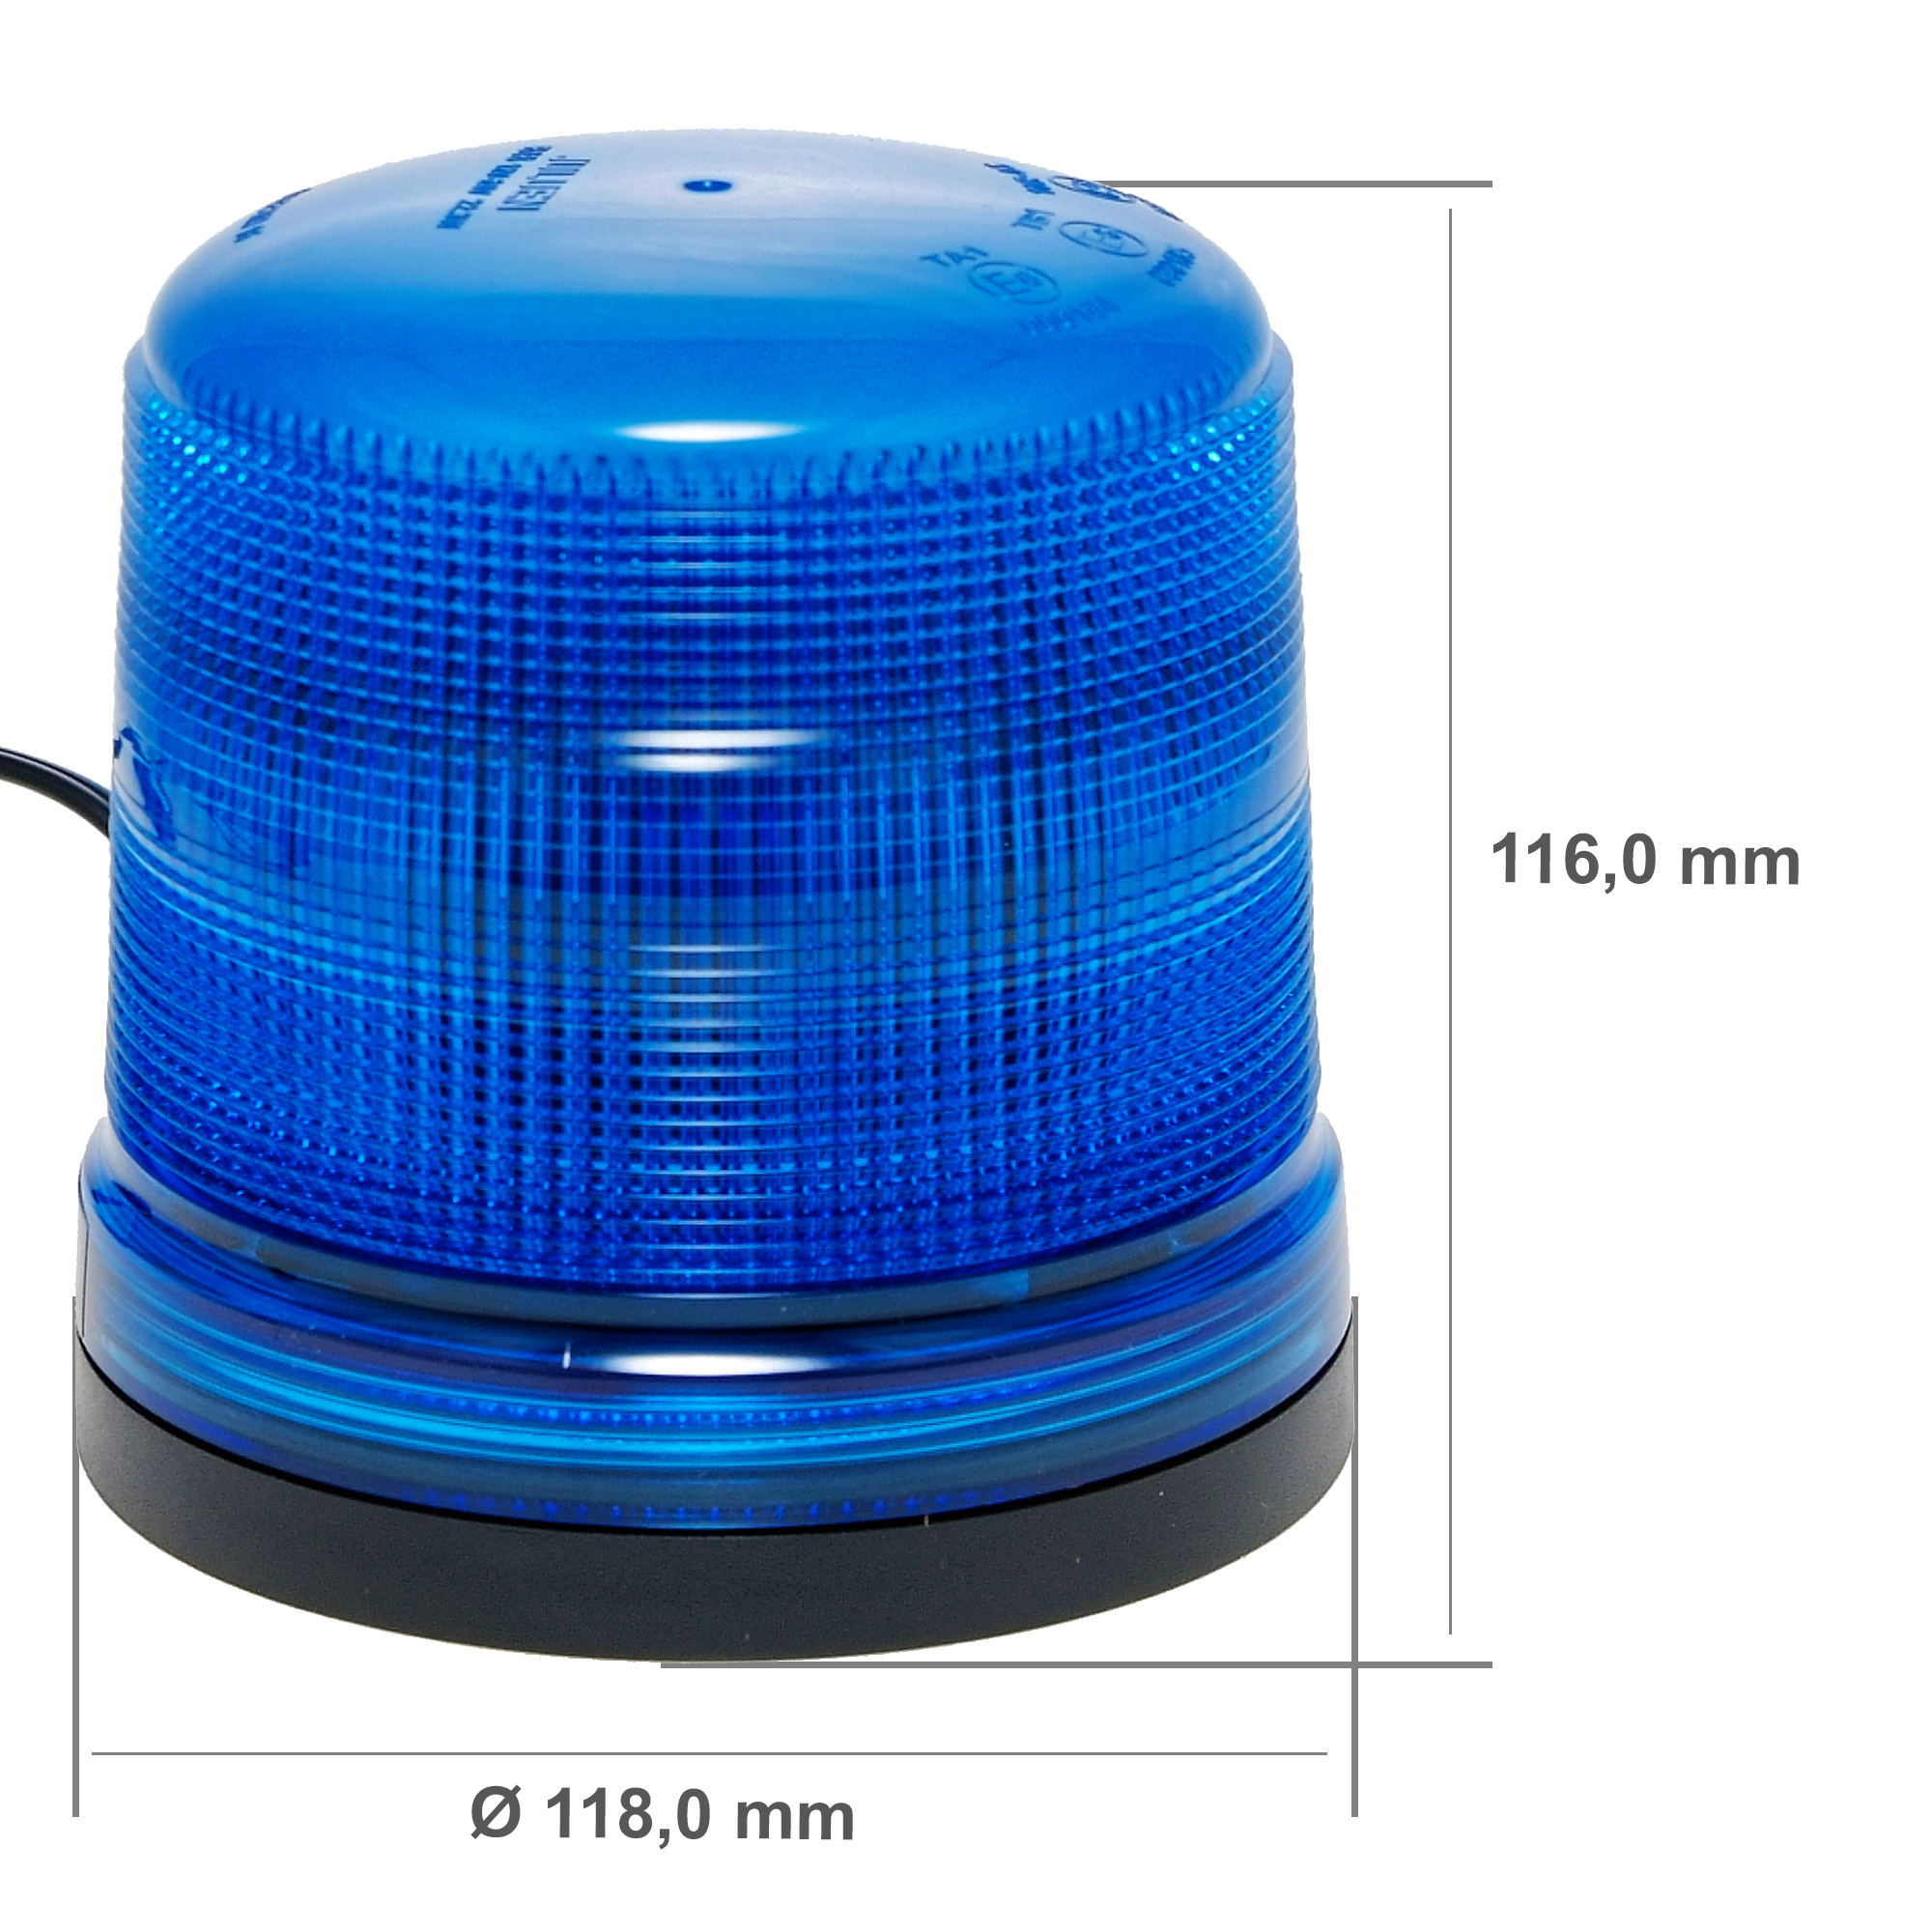 Dinfu Blaulicht Auto Blitzleuchten Magnetfuß LED Rundumleuchte